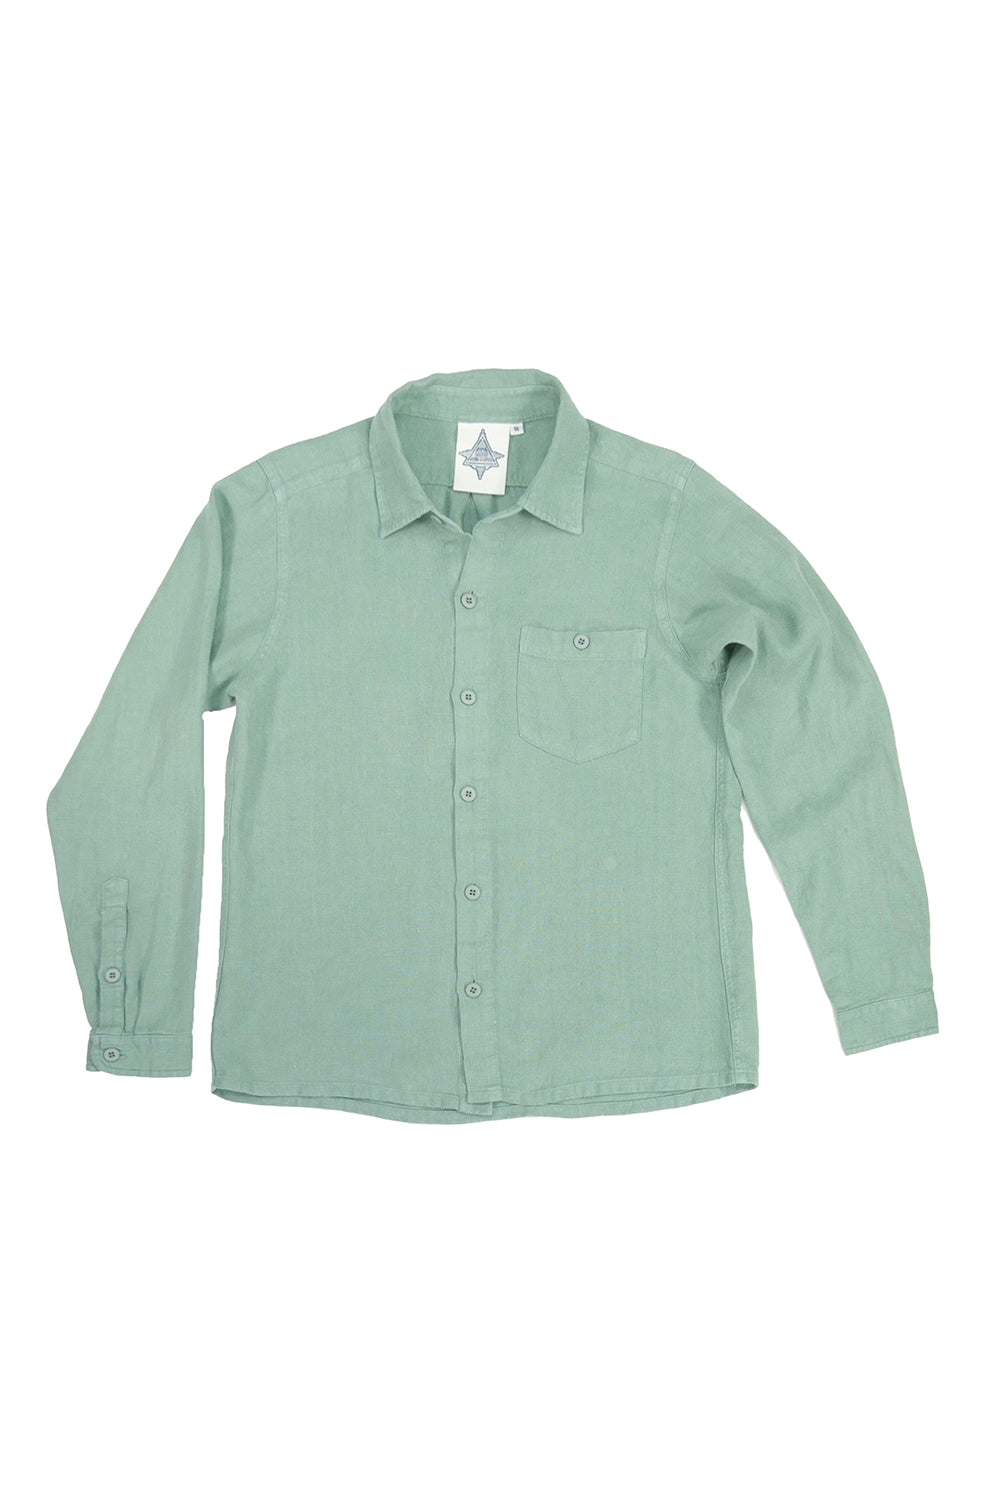 Lassen 100% Hemp Shirt | Jungmaven Hemp Clothing & Accessories / Color: Sage Green